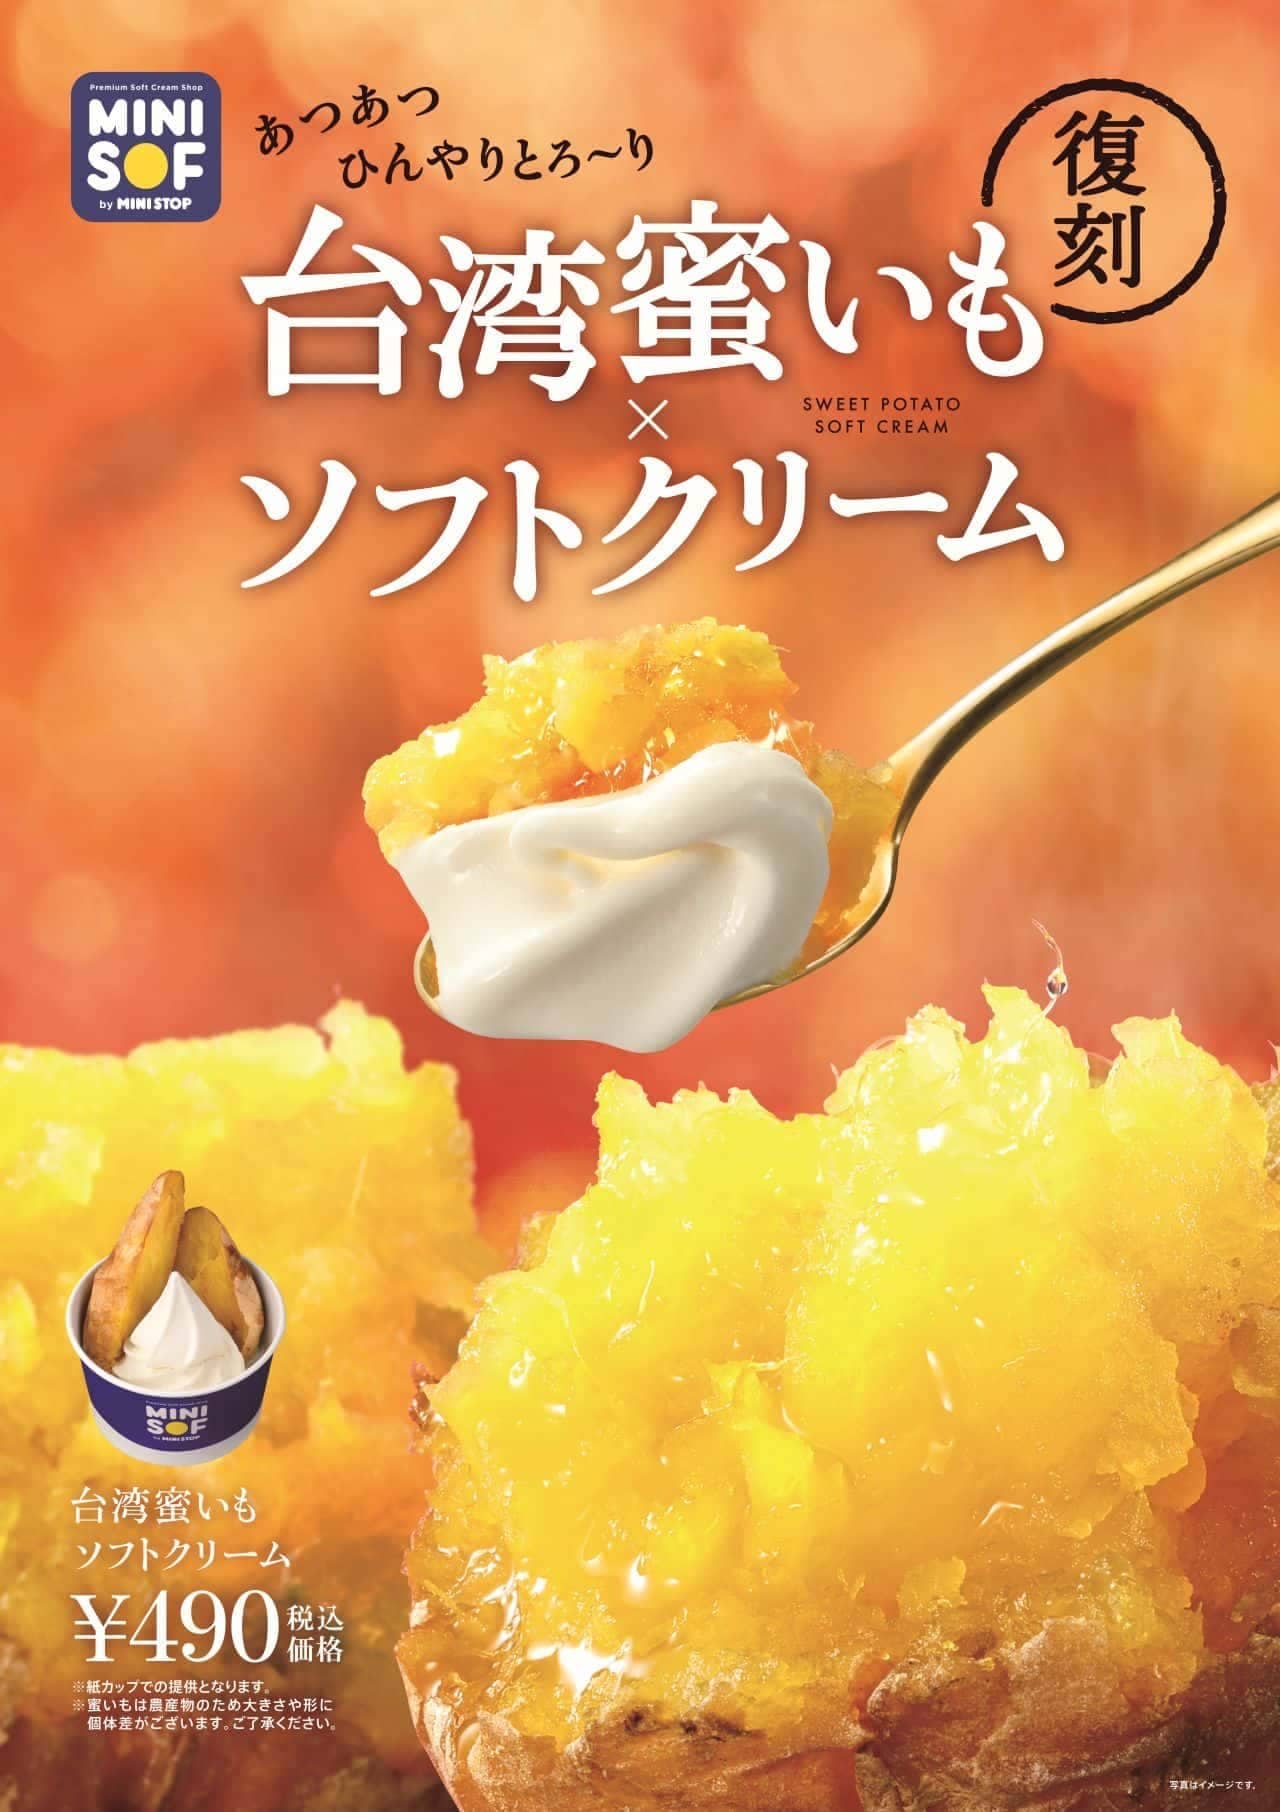 Mini-Sofu "Taiwanese Honey Imo Soft Ice Cream"